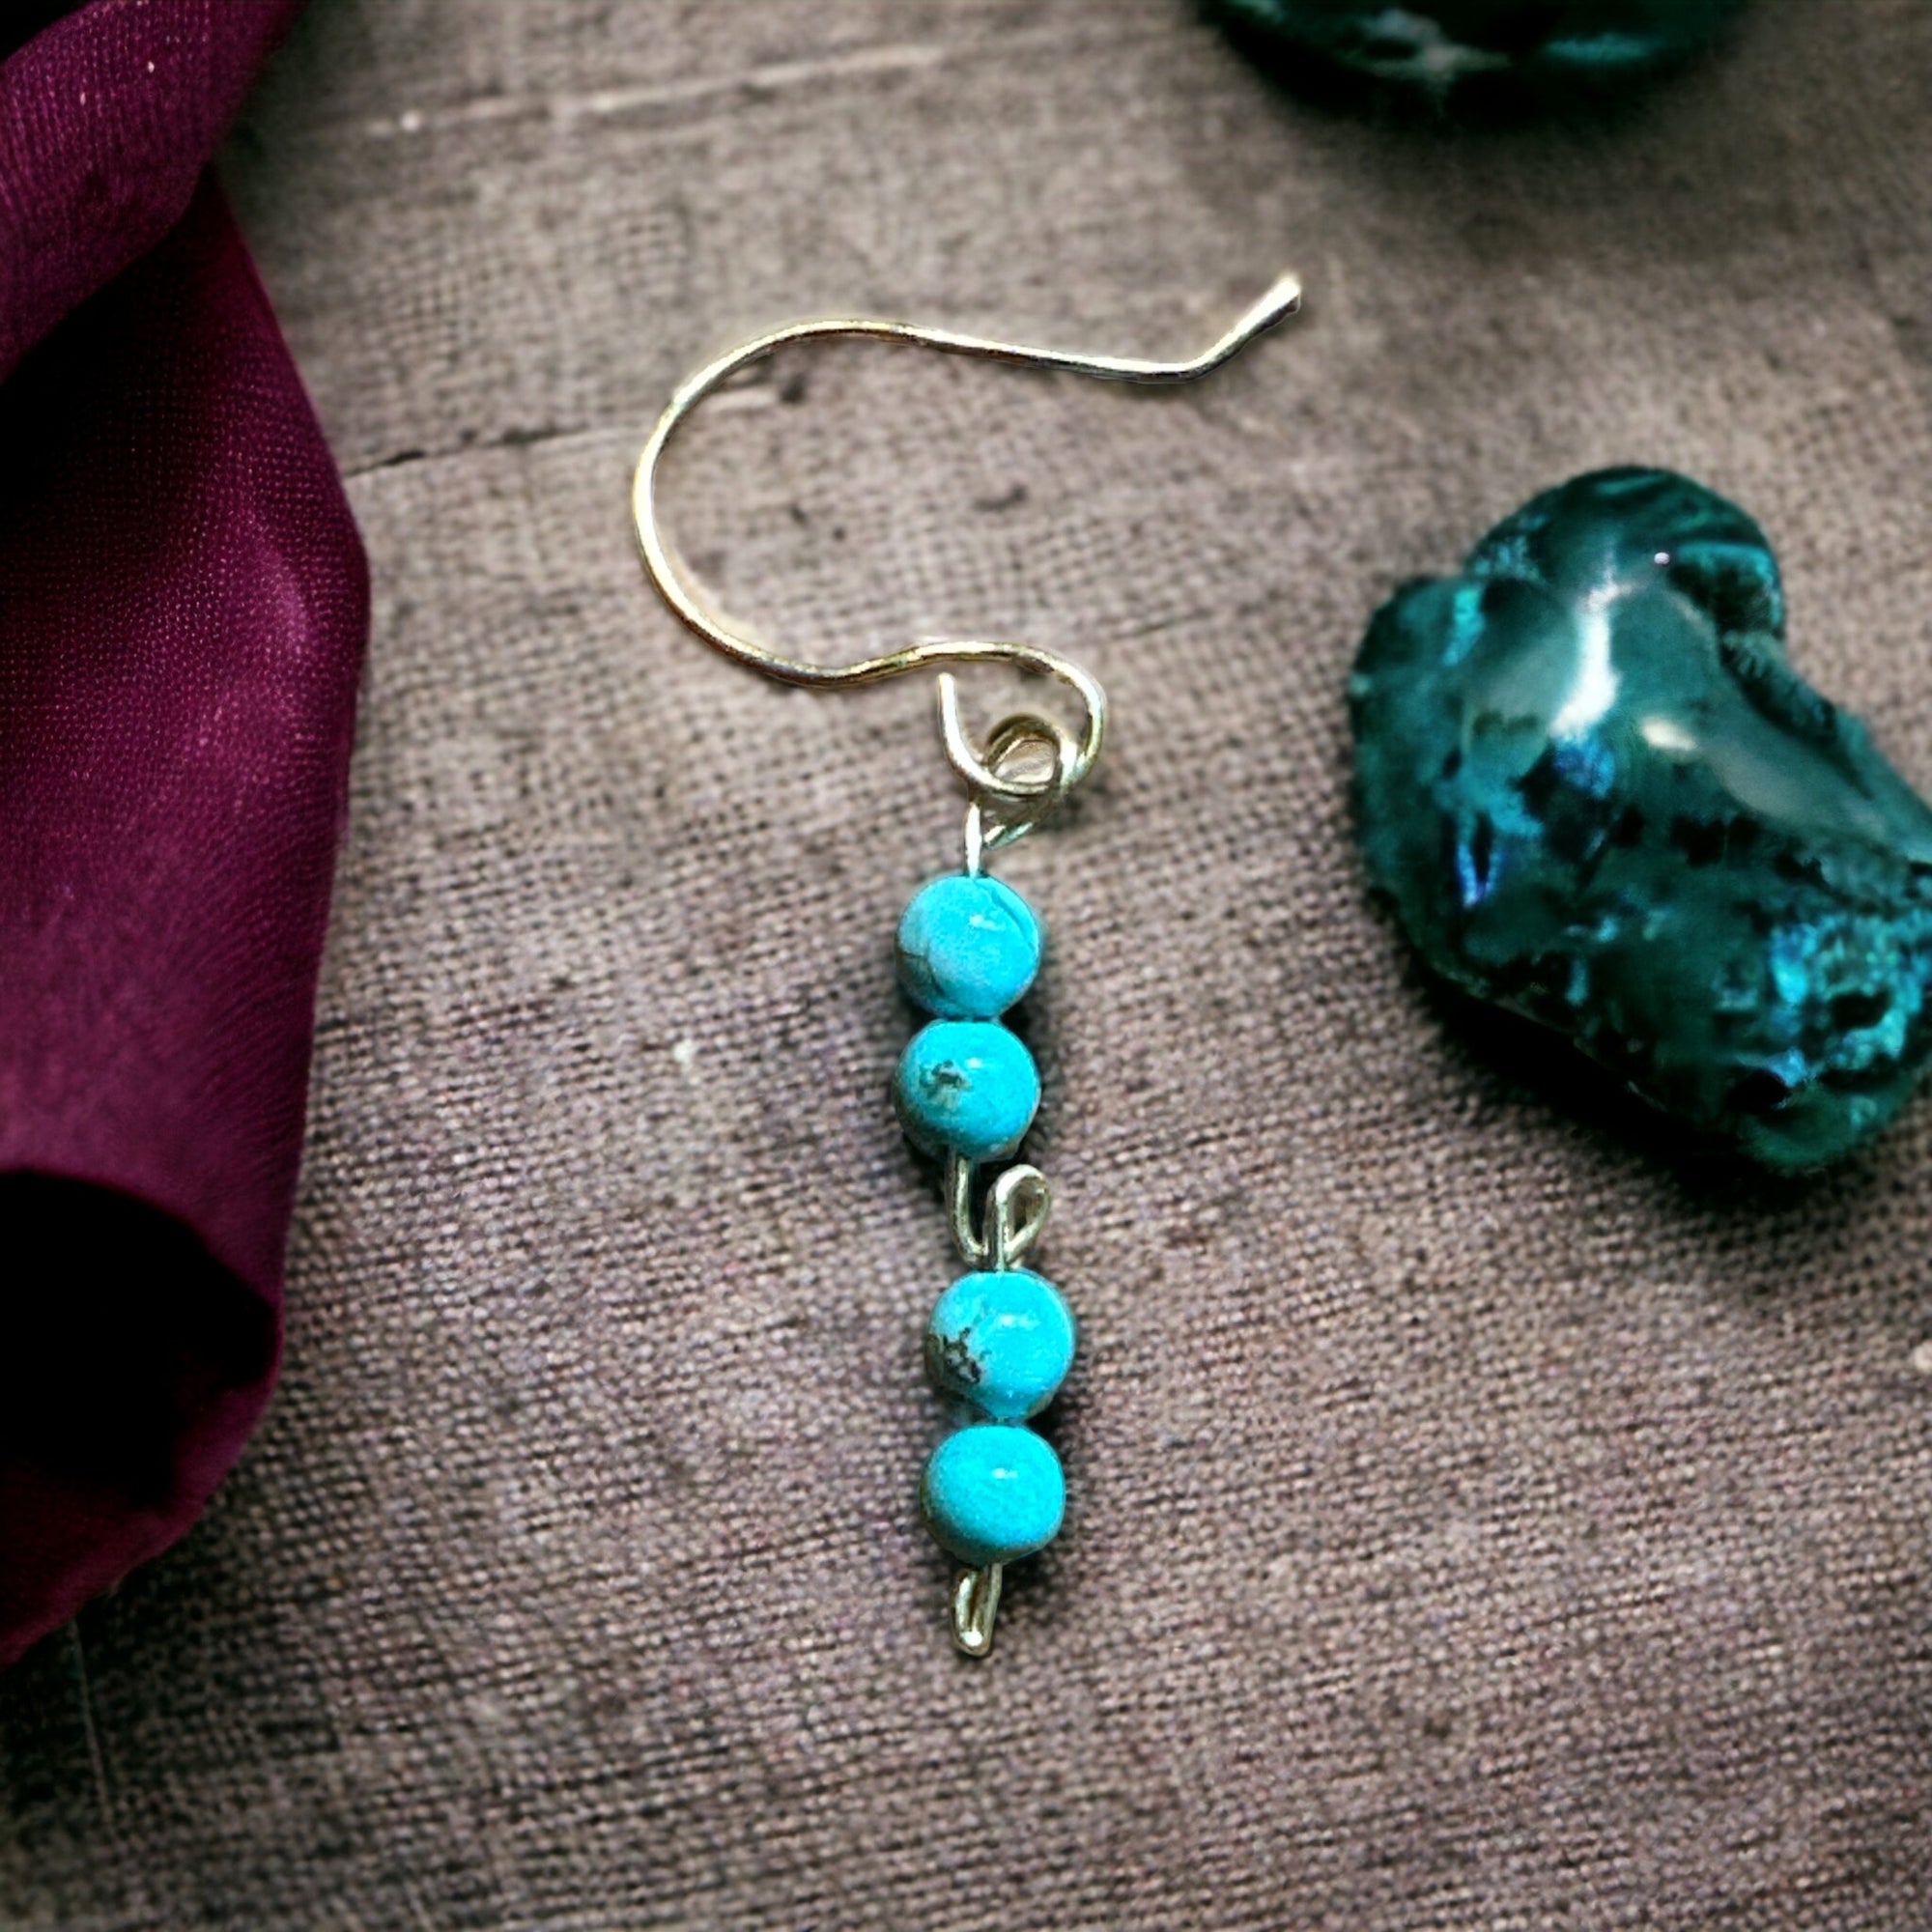 14k Dainty Turquoise Dangle Earrings - 4mm gemstones